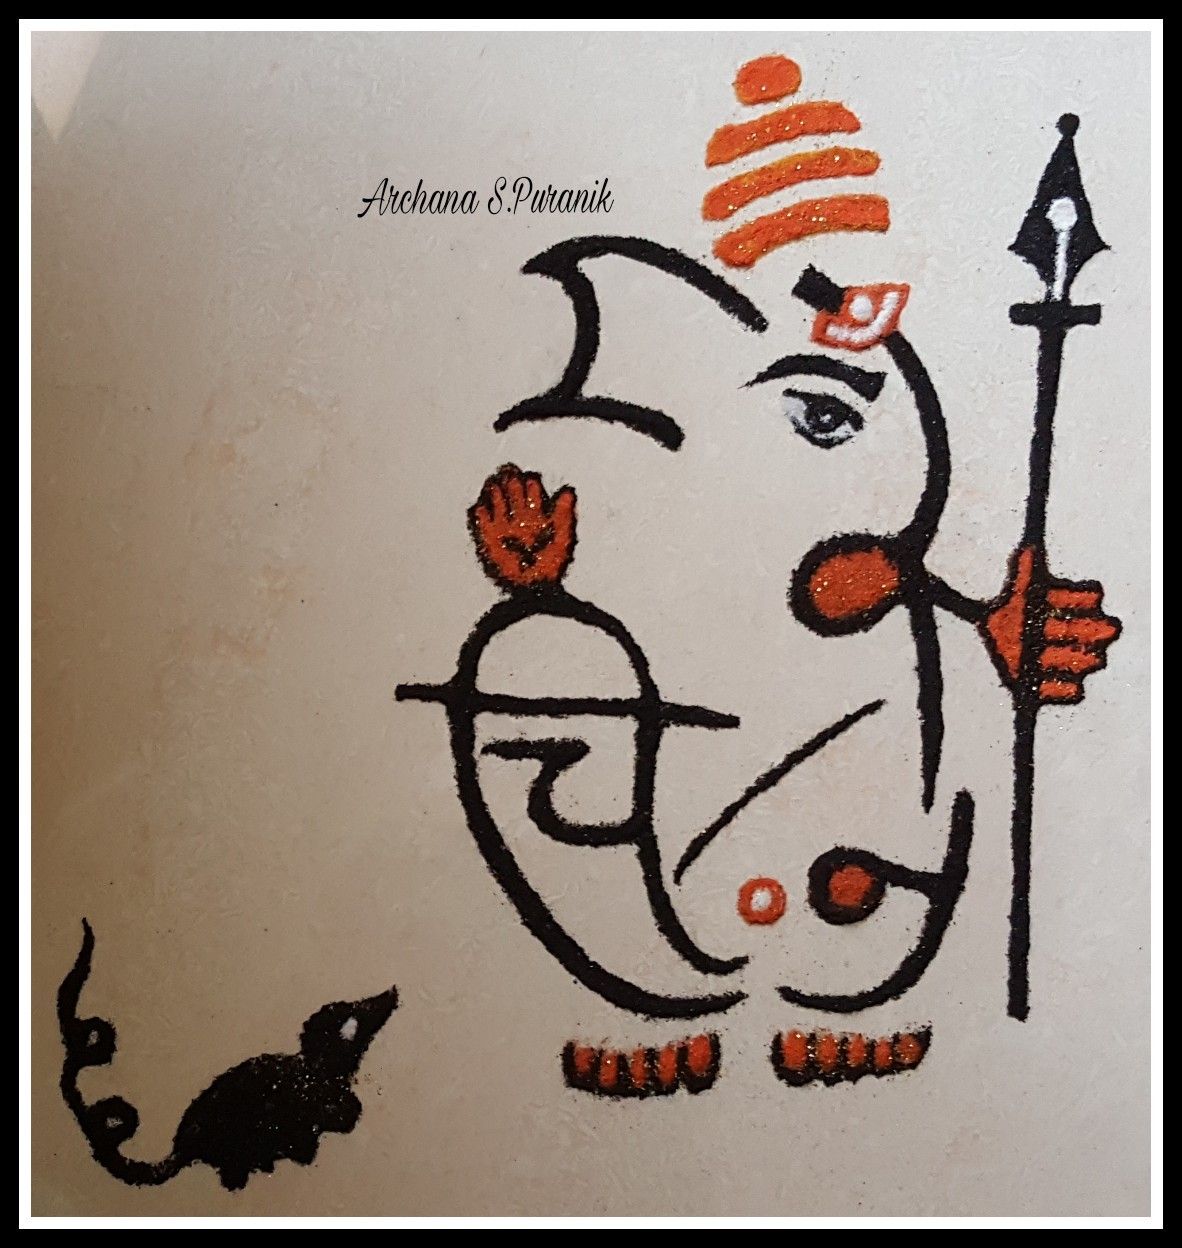 Sachin Name Ganpati Image Download - 1182x1248 Wallpaper 